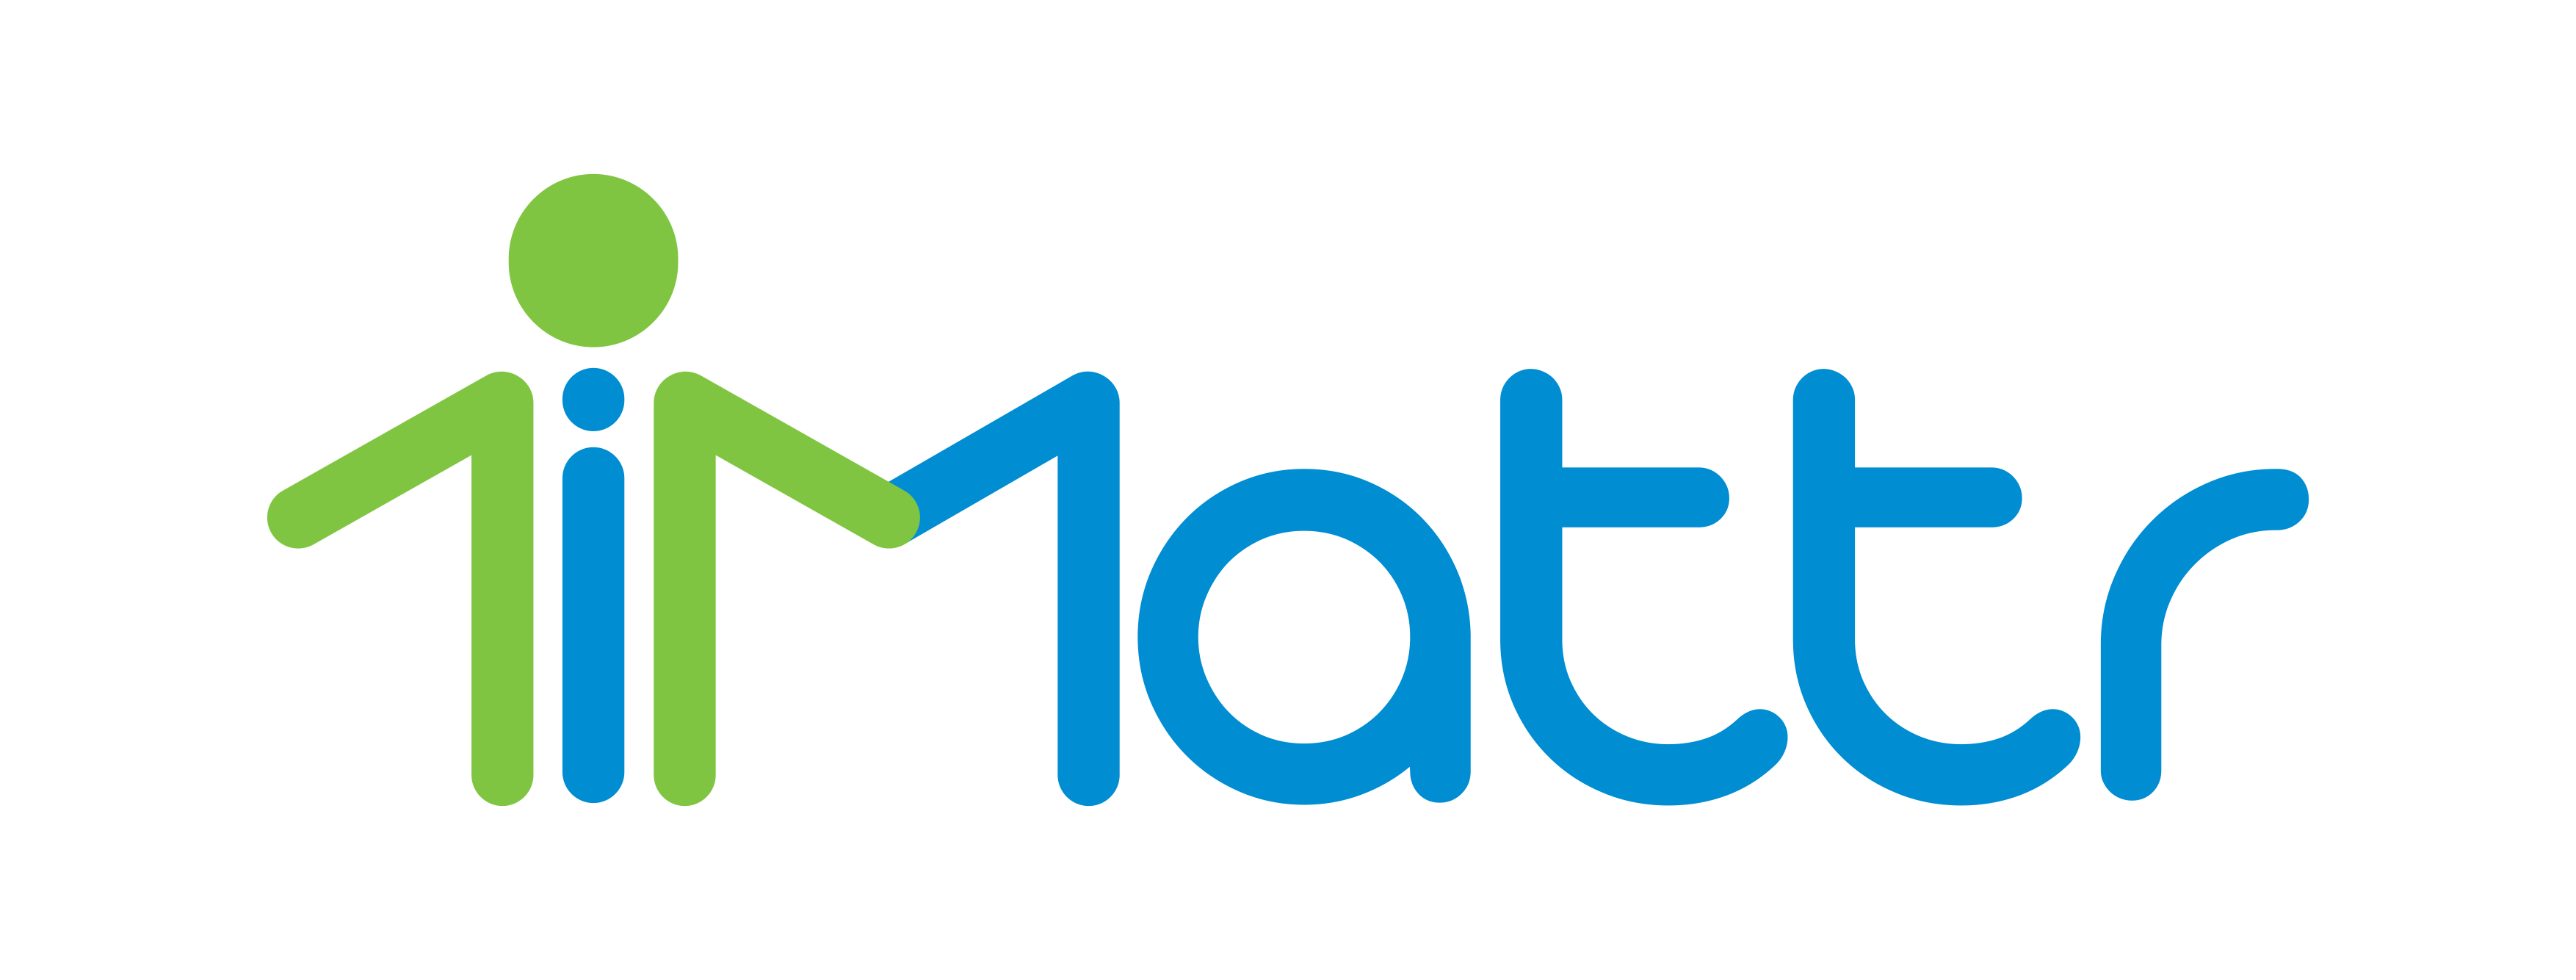 iMattr logo image